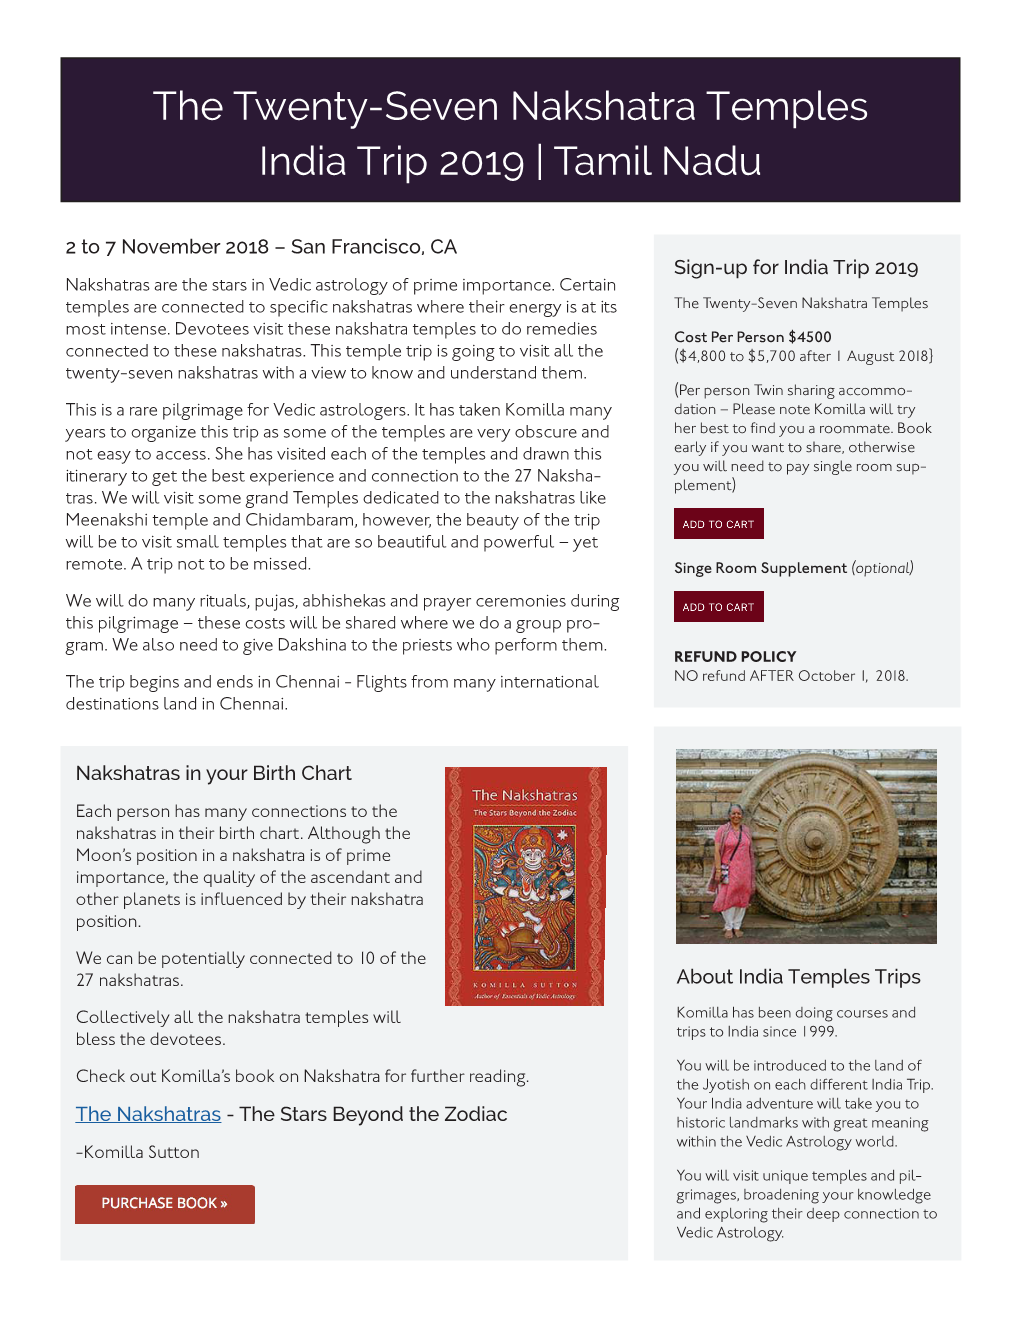 The Twenty-Seven Nakshatra Temples India Trip 2019 | Tamil Nadu